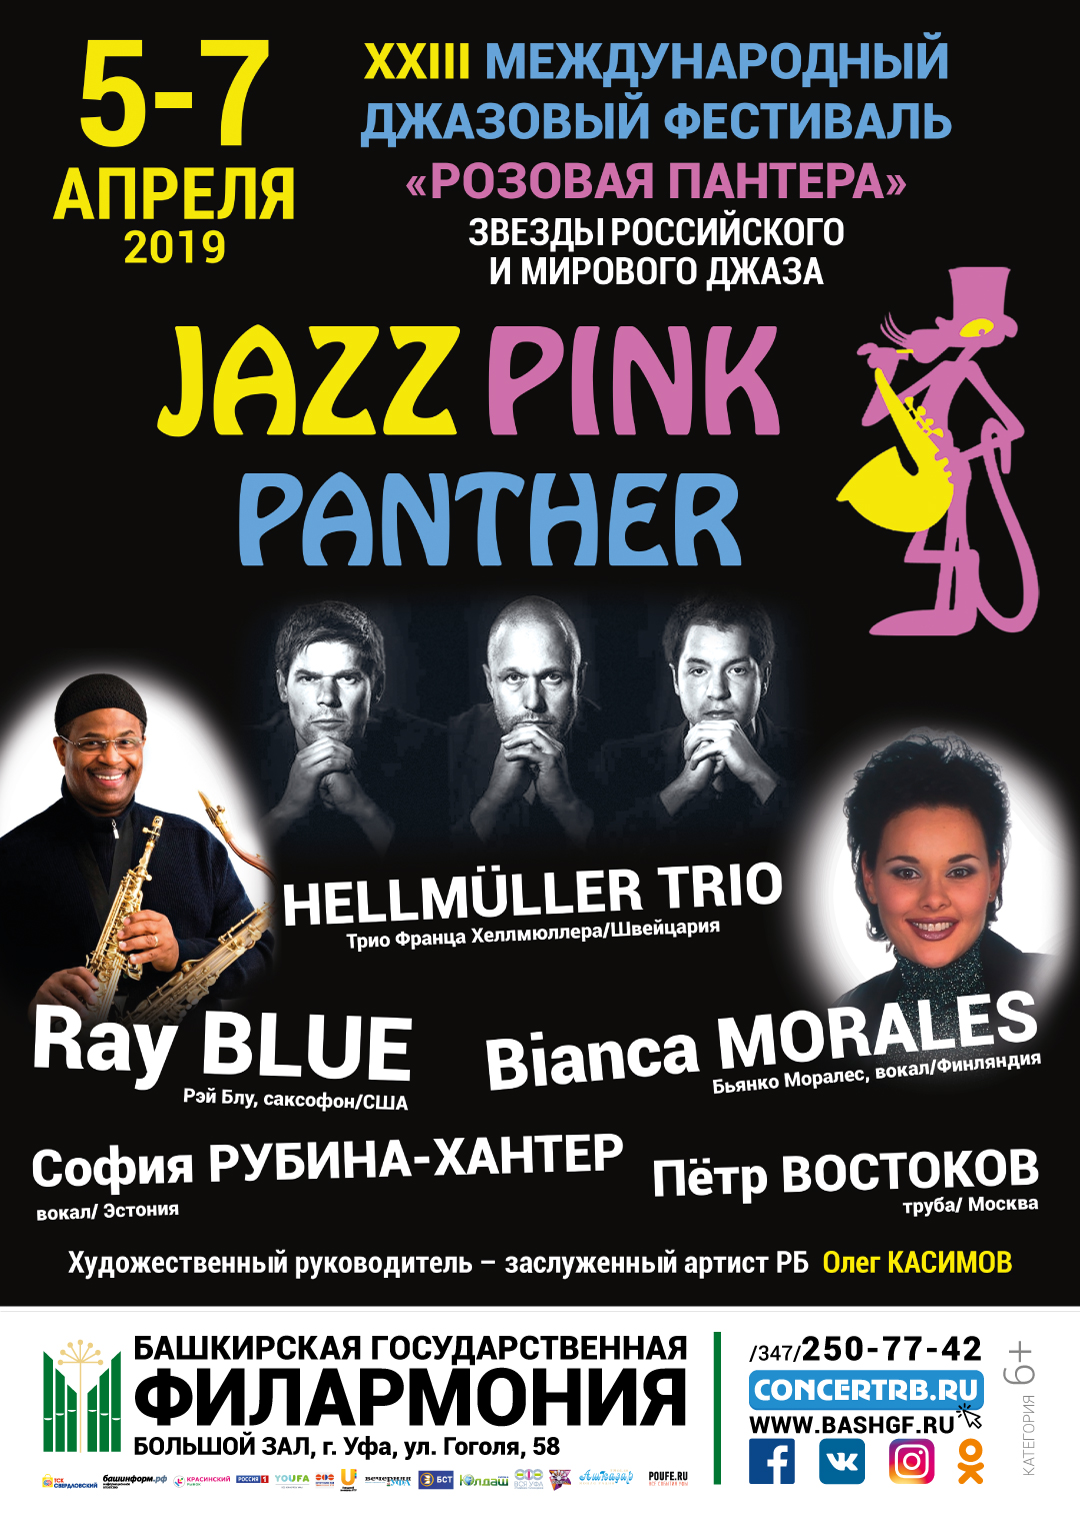 Опубликована программа джазового фестиваля «Розовая пантера» в Уфе 